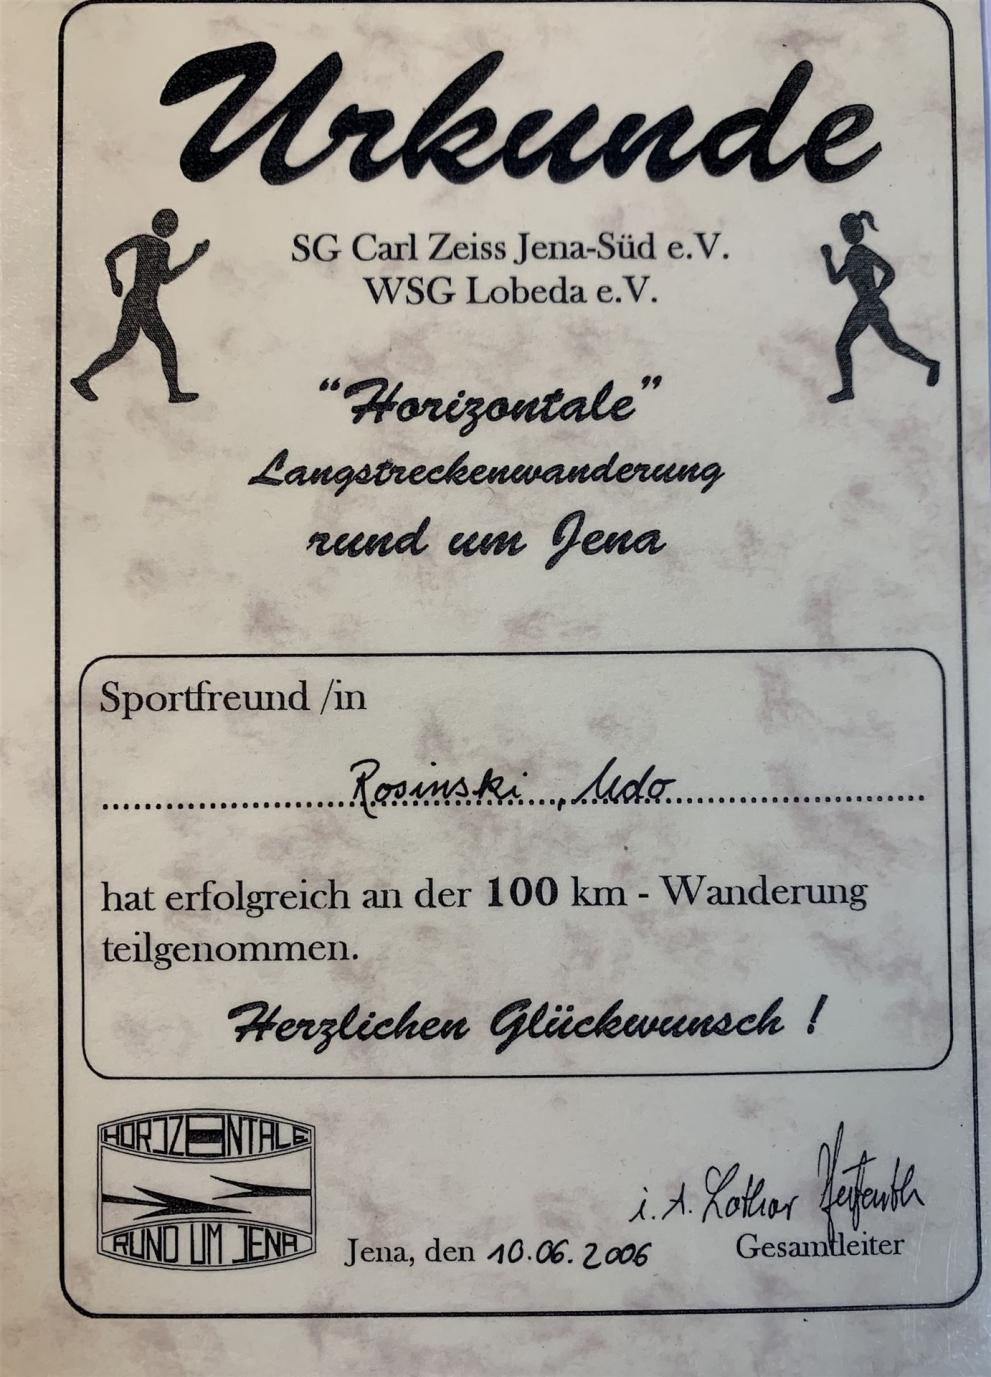 Horizontale 2006 - Urkunde